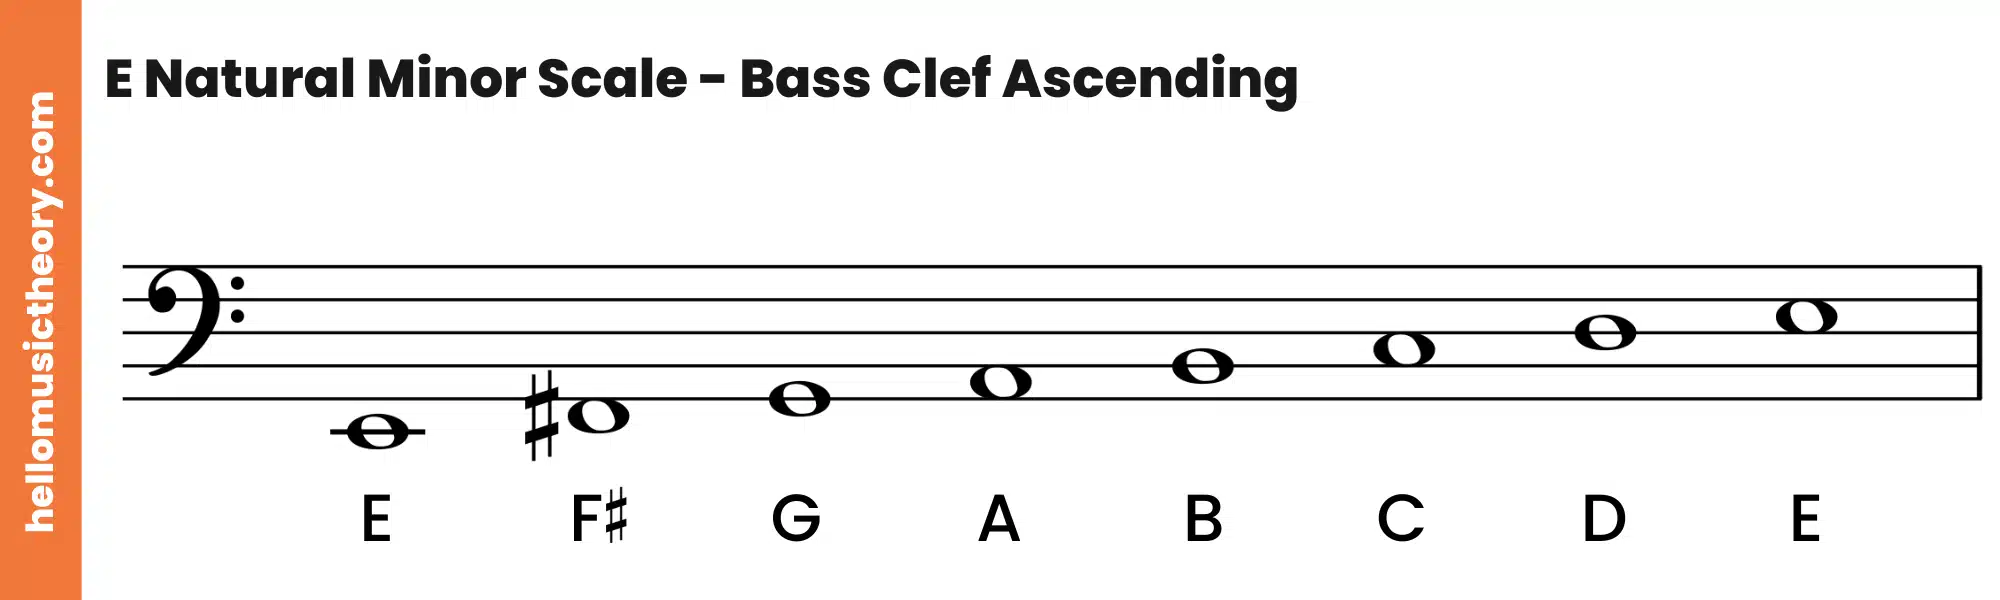 E Natural Minor Scale Bass Clef Ascending